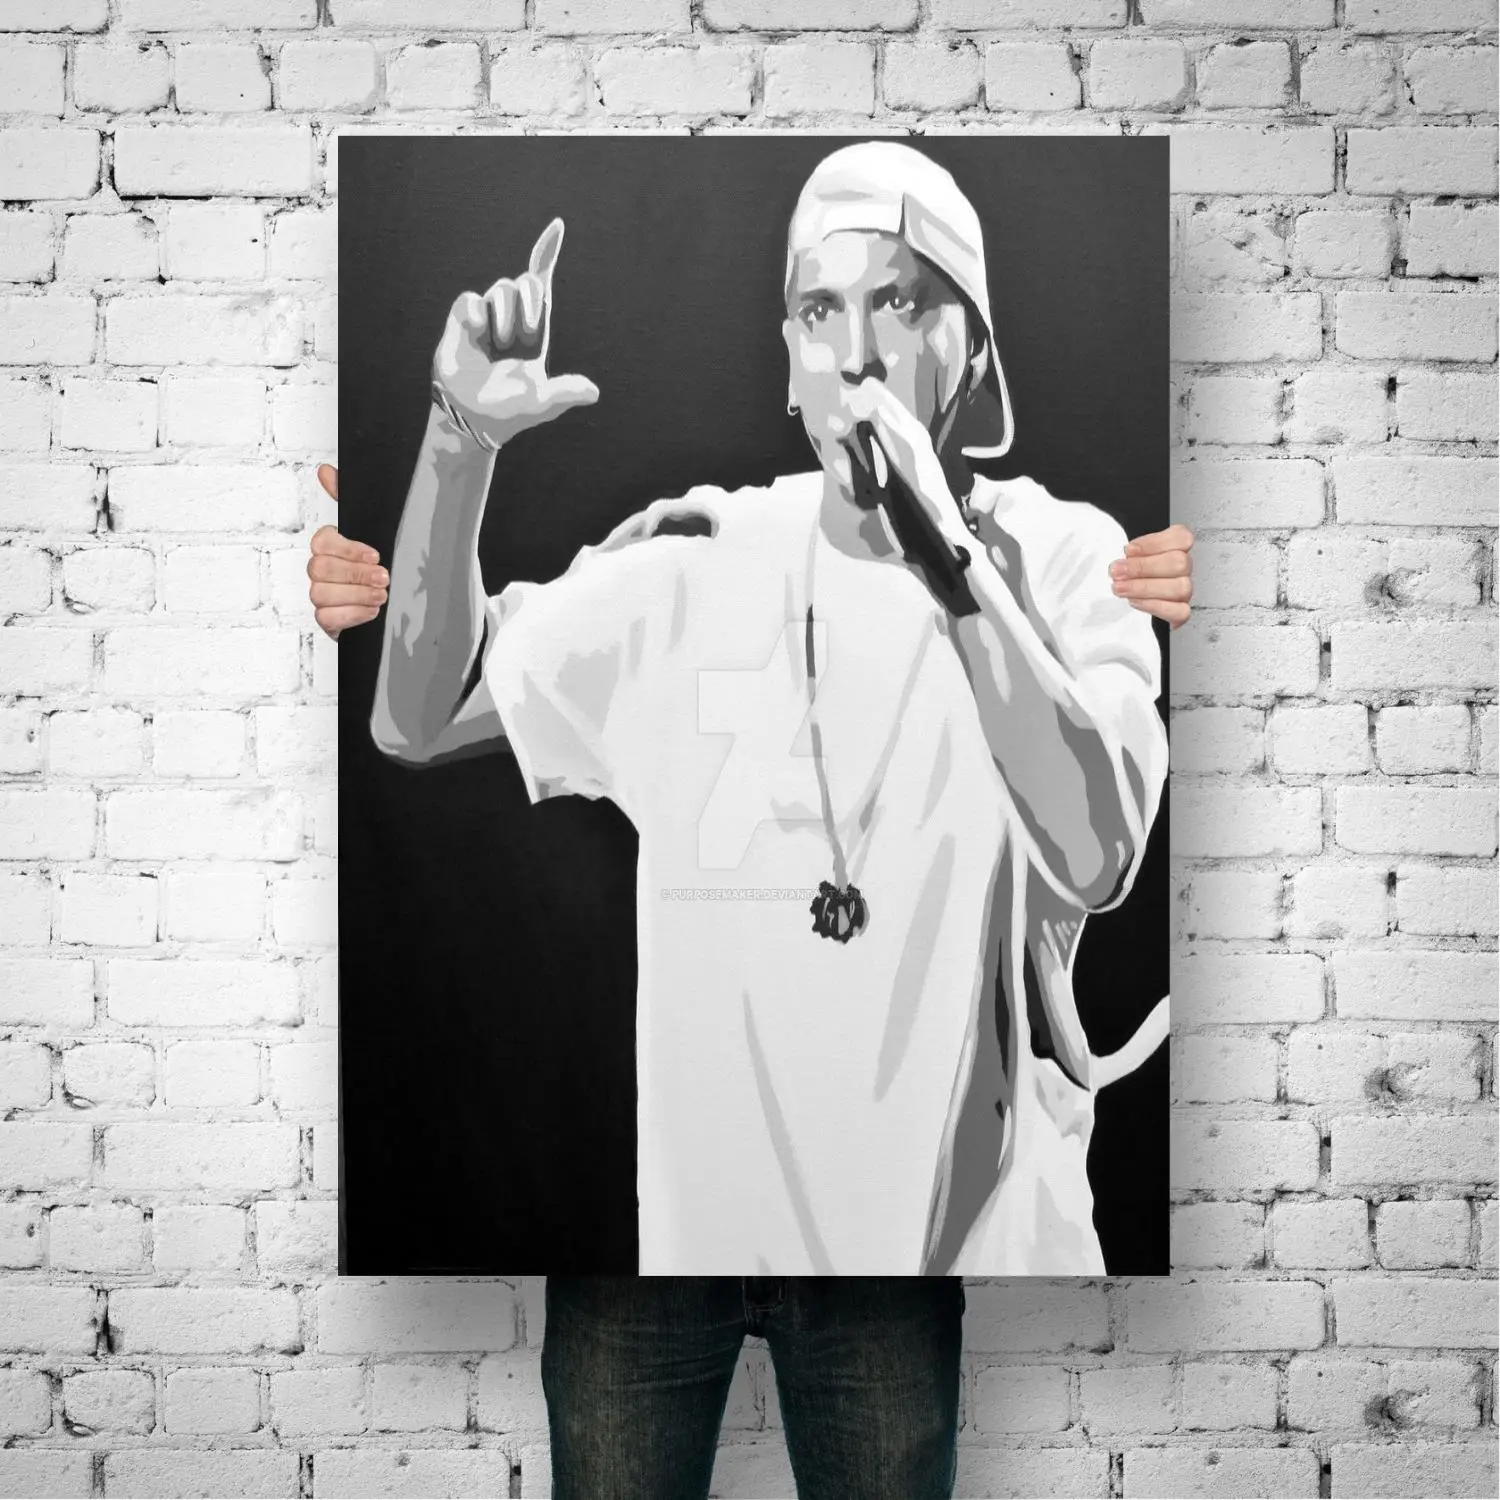 Eminem - Music/Personality Poster (Mugshot) (Size 24 x 36)